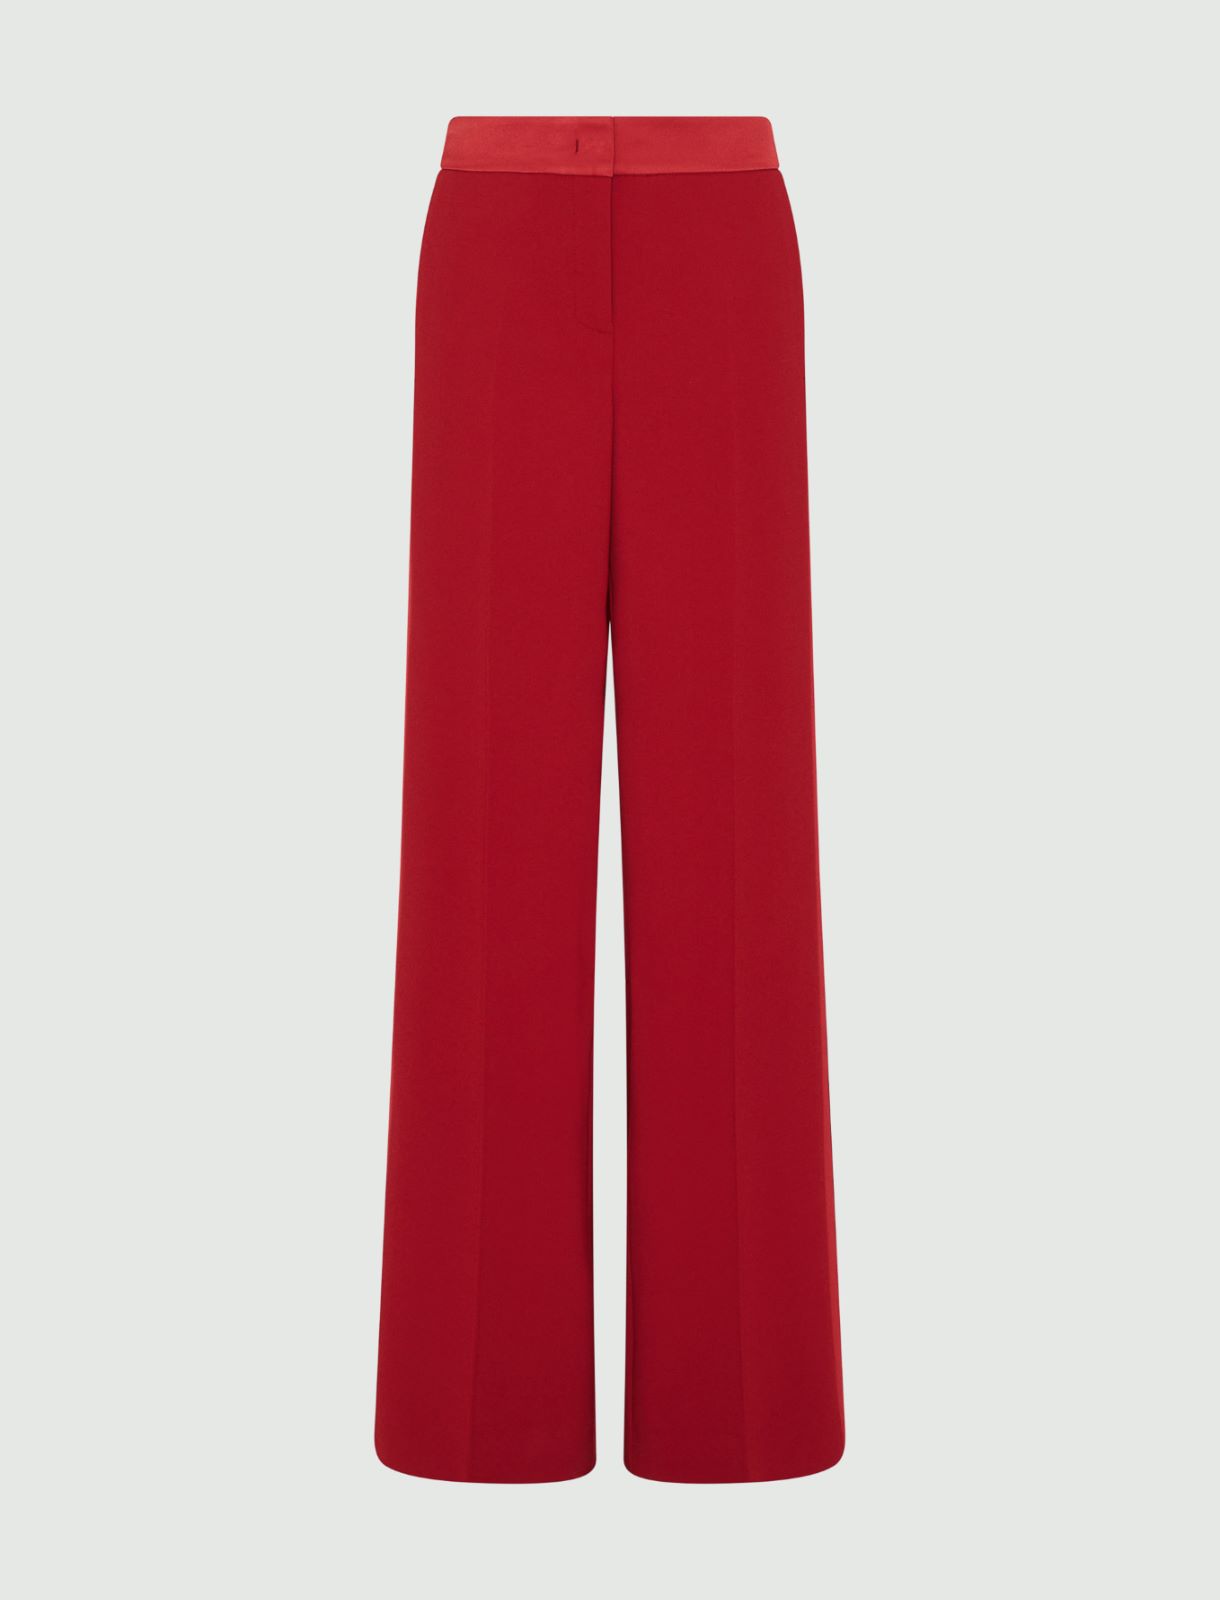 Straight-leg trousers, red | Marella